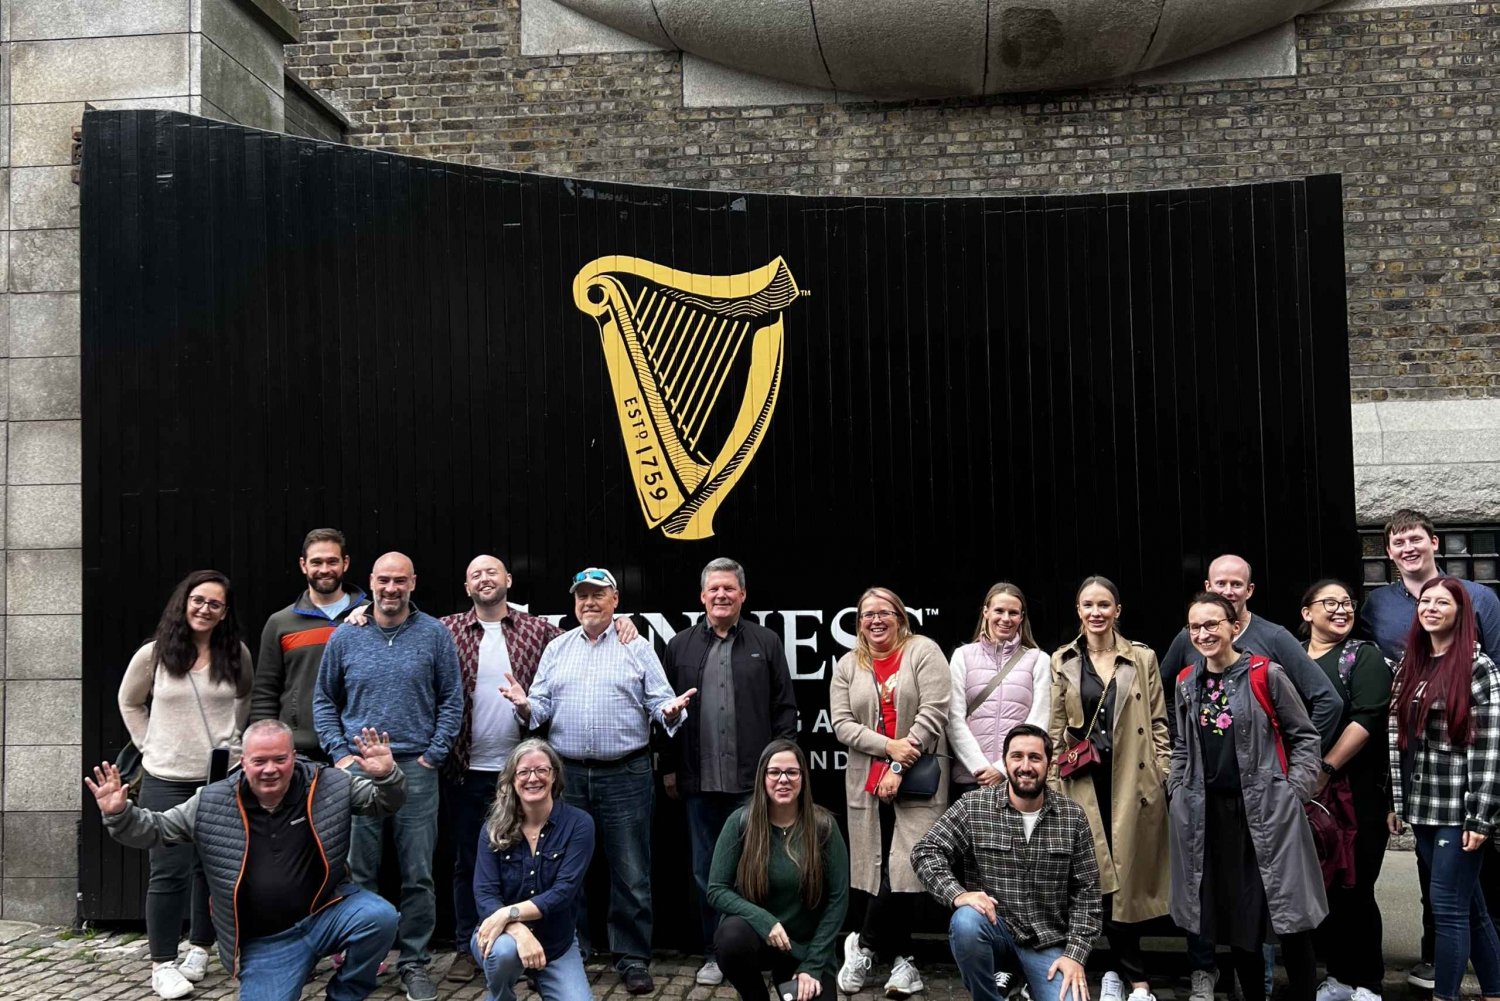 Dublino: Guinness Storehouse e Perfect Pint Tour